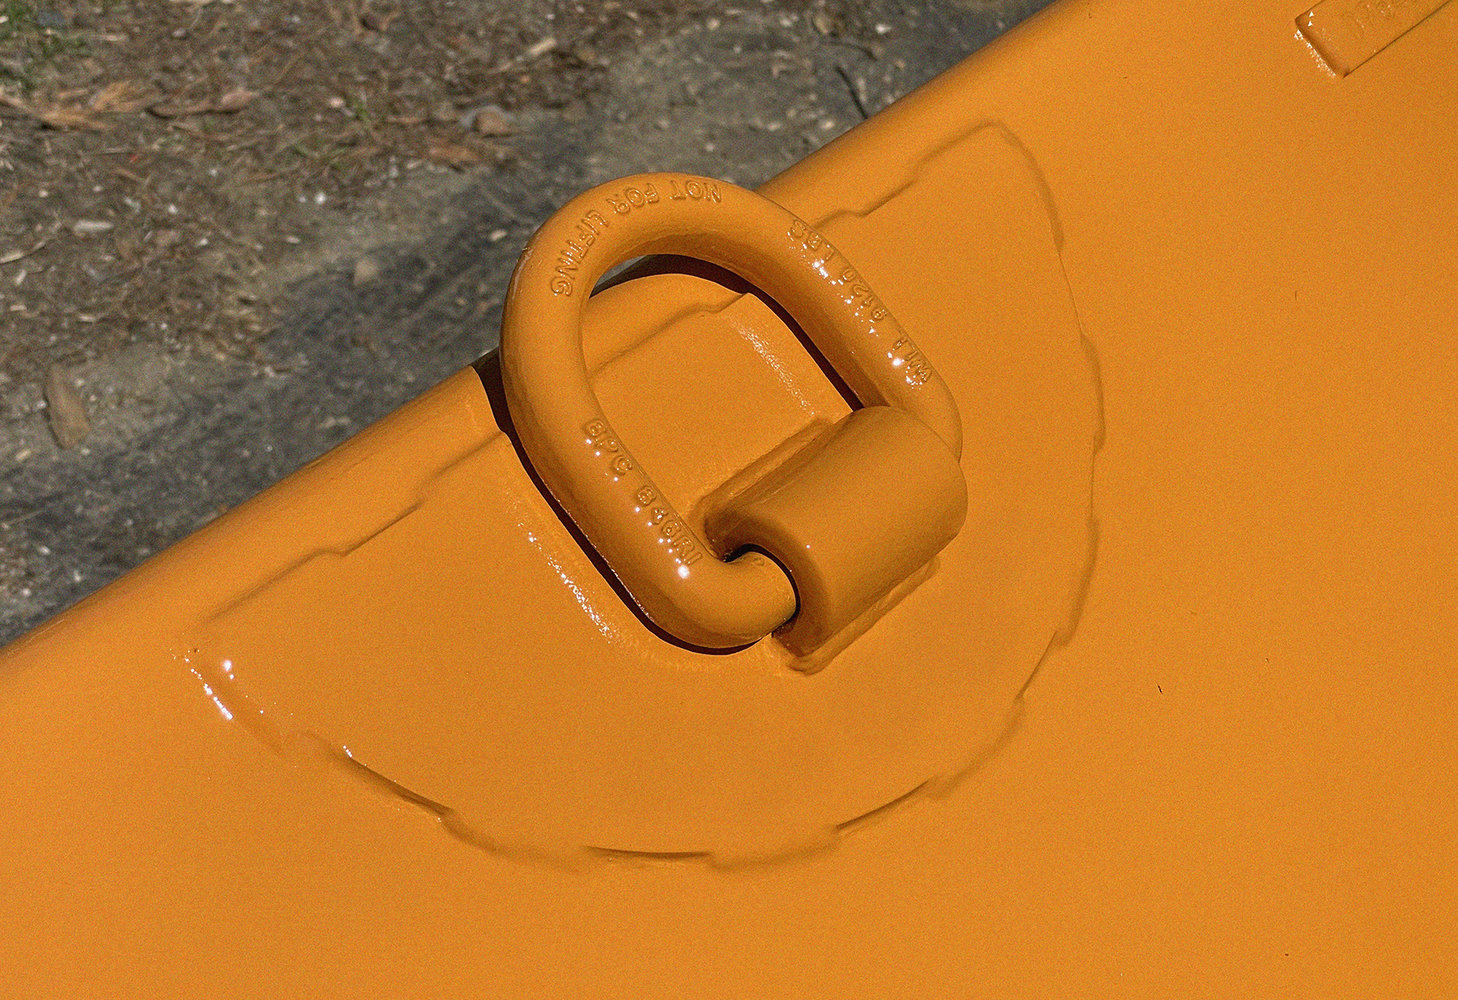 pulling-ring-welded-sealed-painted-smaller-image.jpg